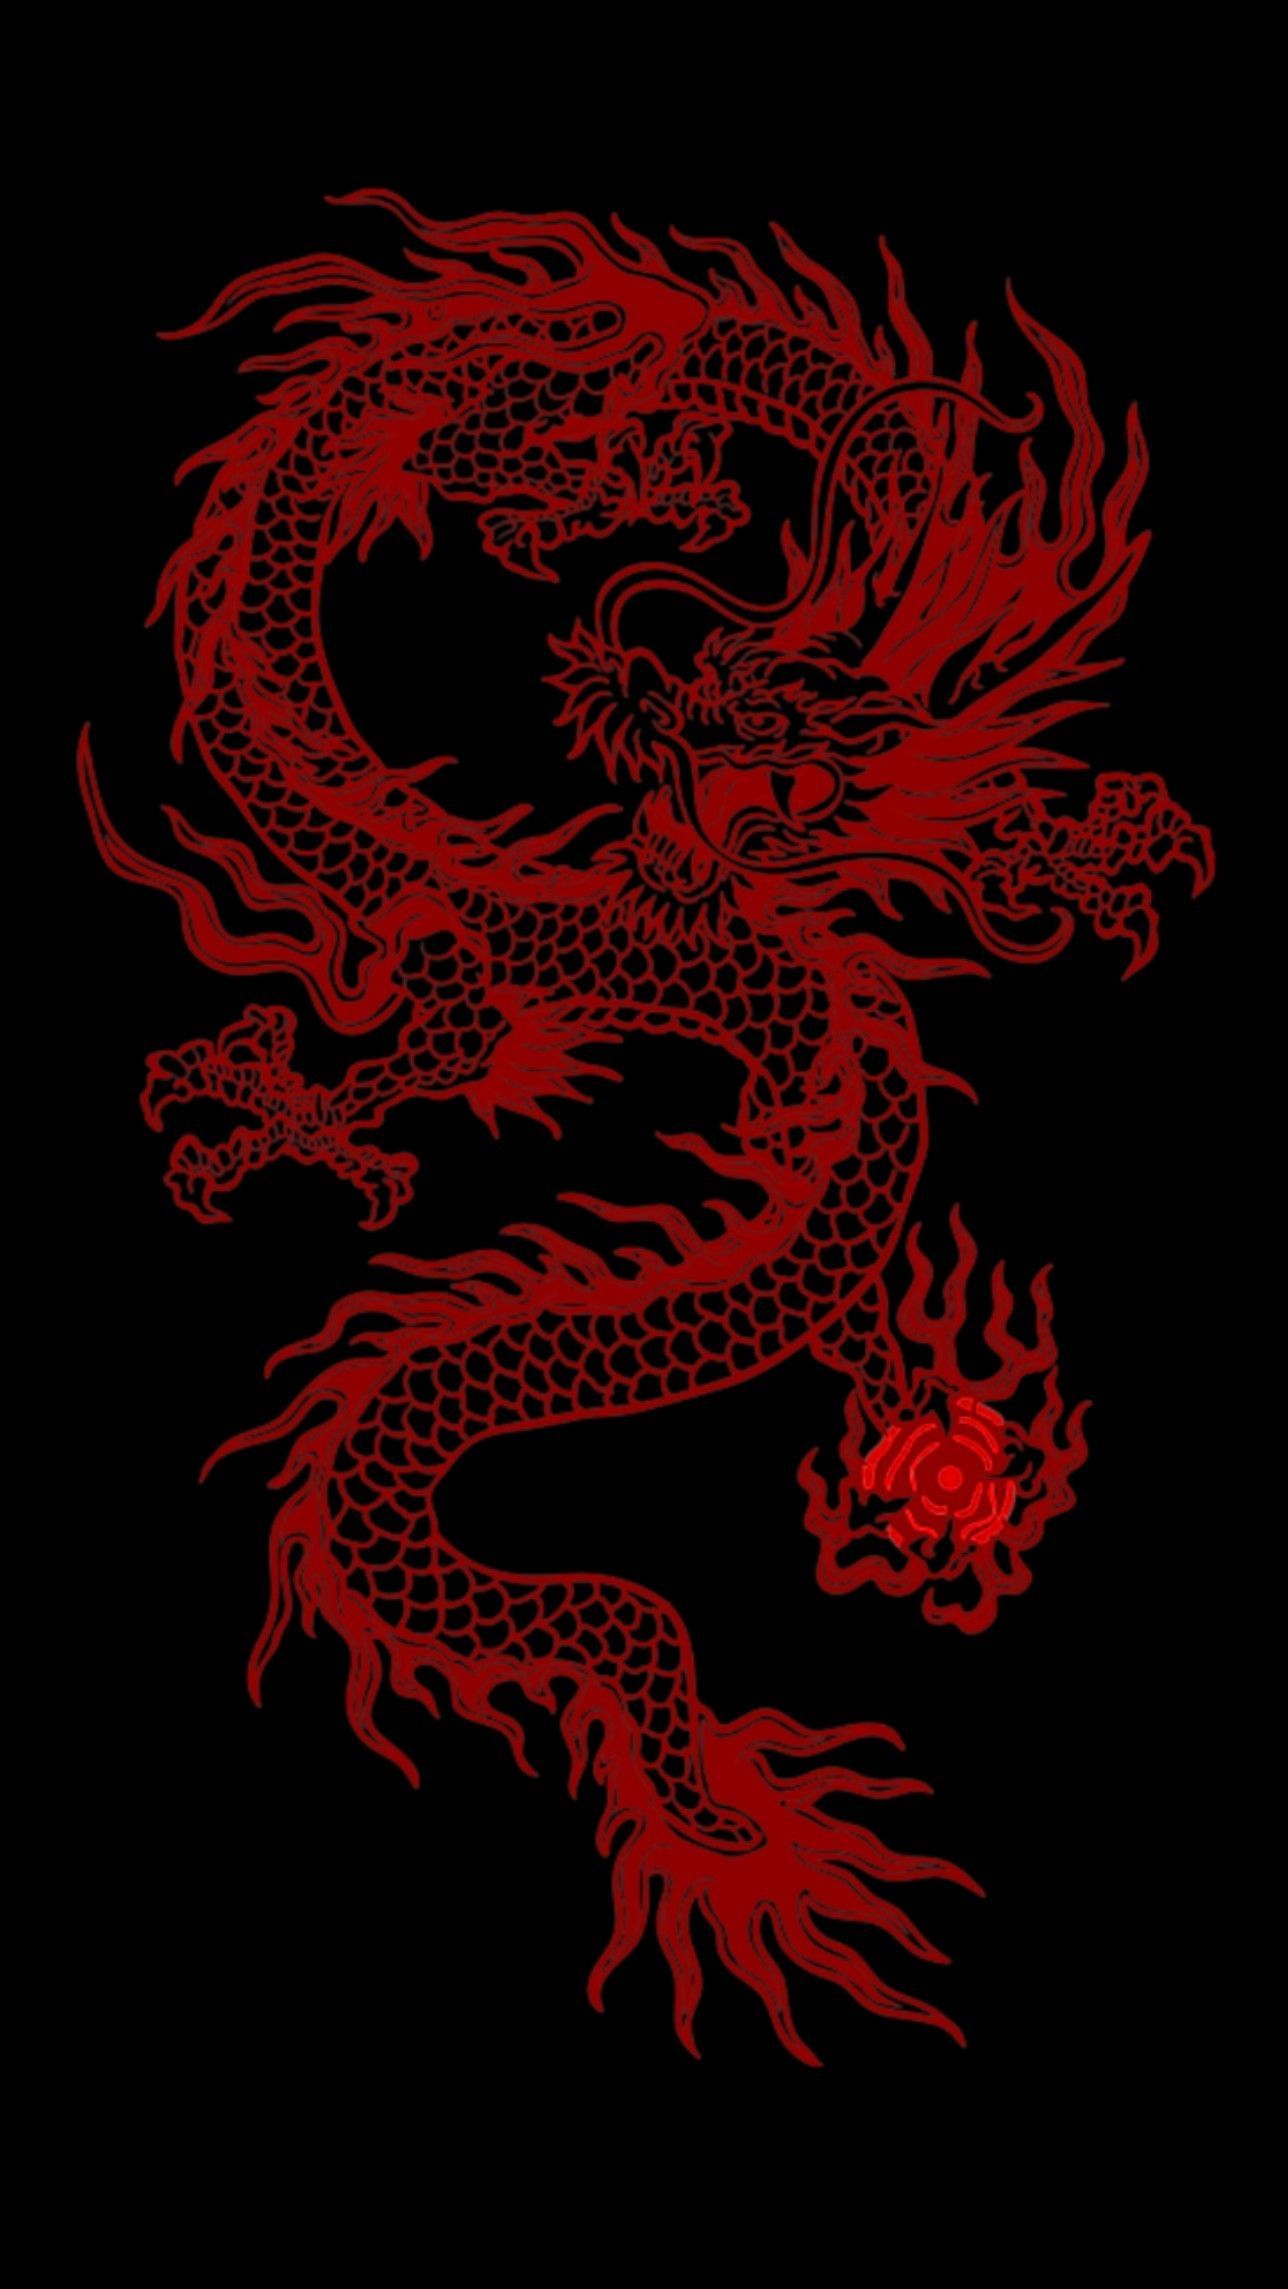 Red Dragon. Dragon wallpaper iphone .com